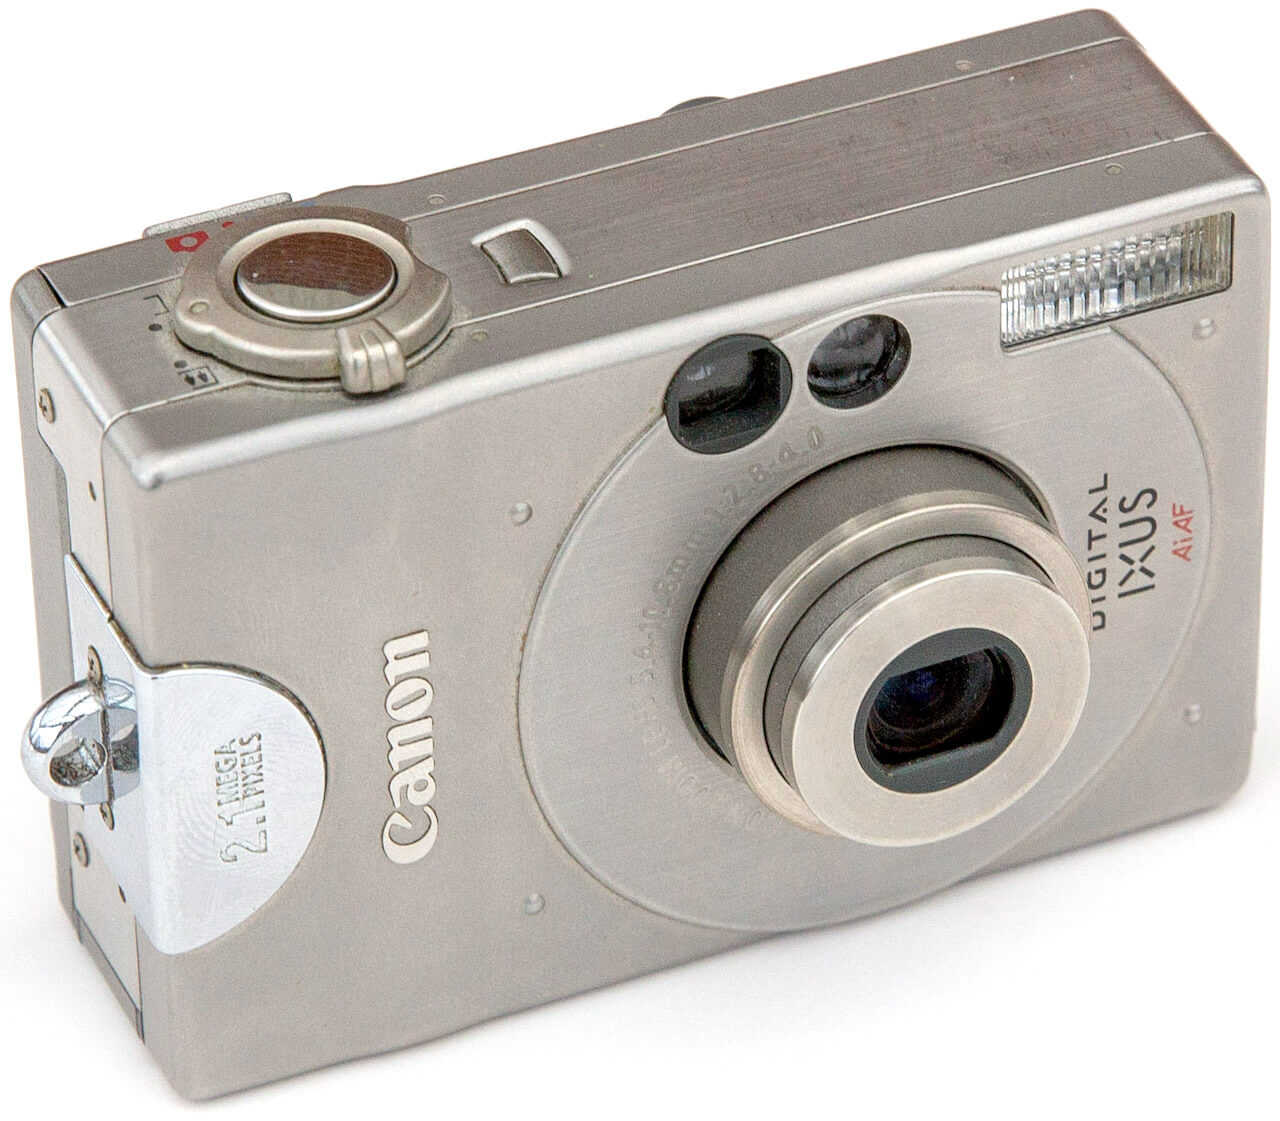 My first digital camera, the Canon Digital Ixus. (184-162)